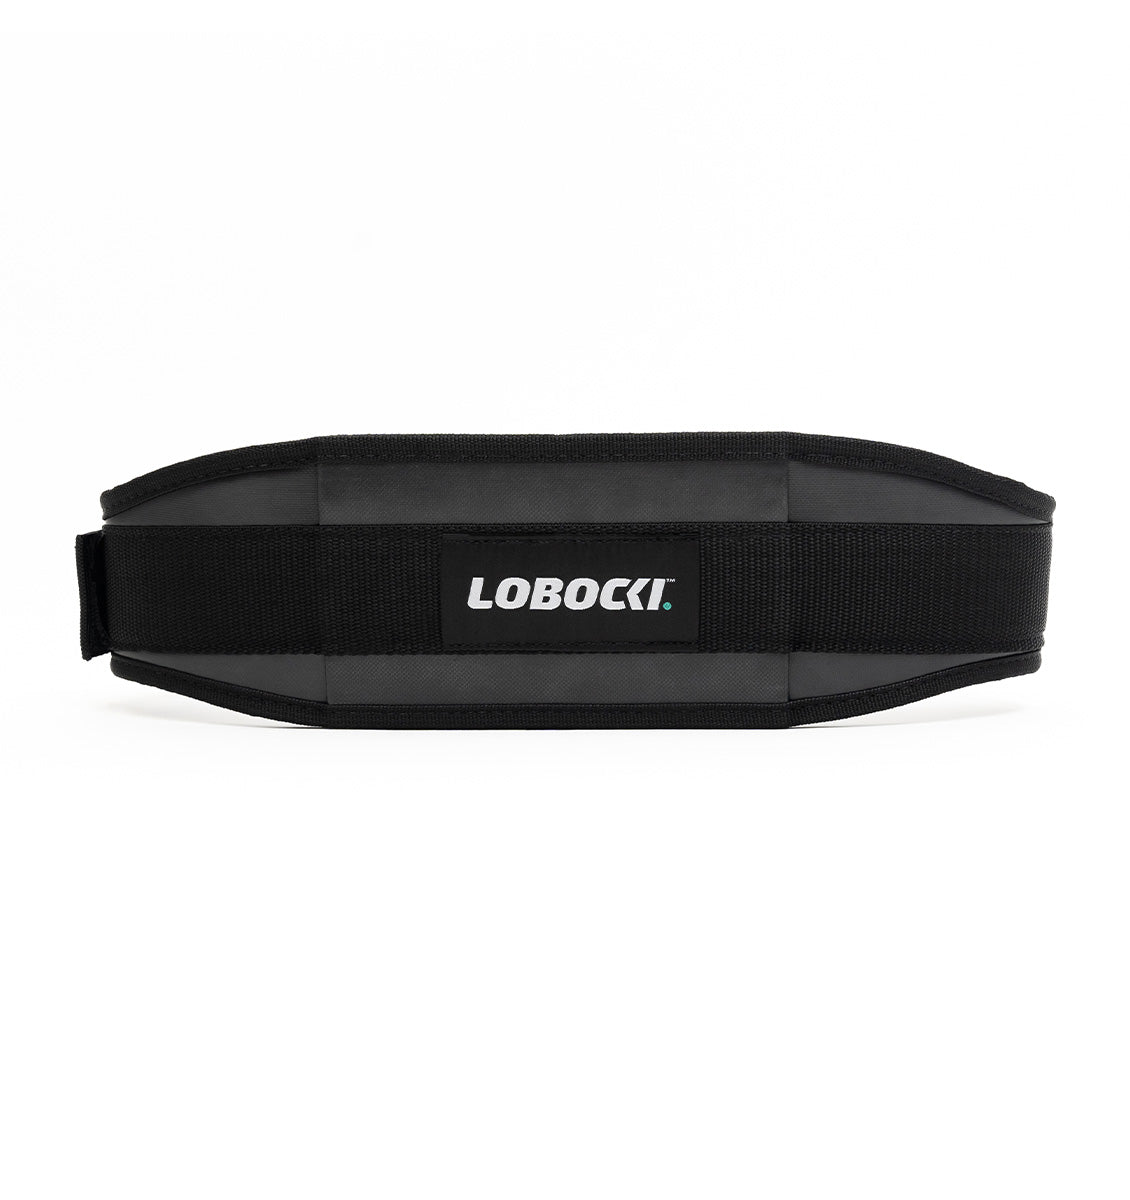 LOBOCKI x Schiek 3004 Power Contour Weight Lifting Belt - Black - 1